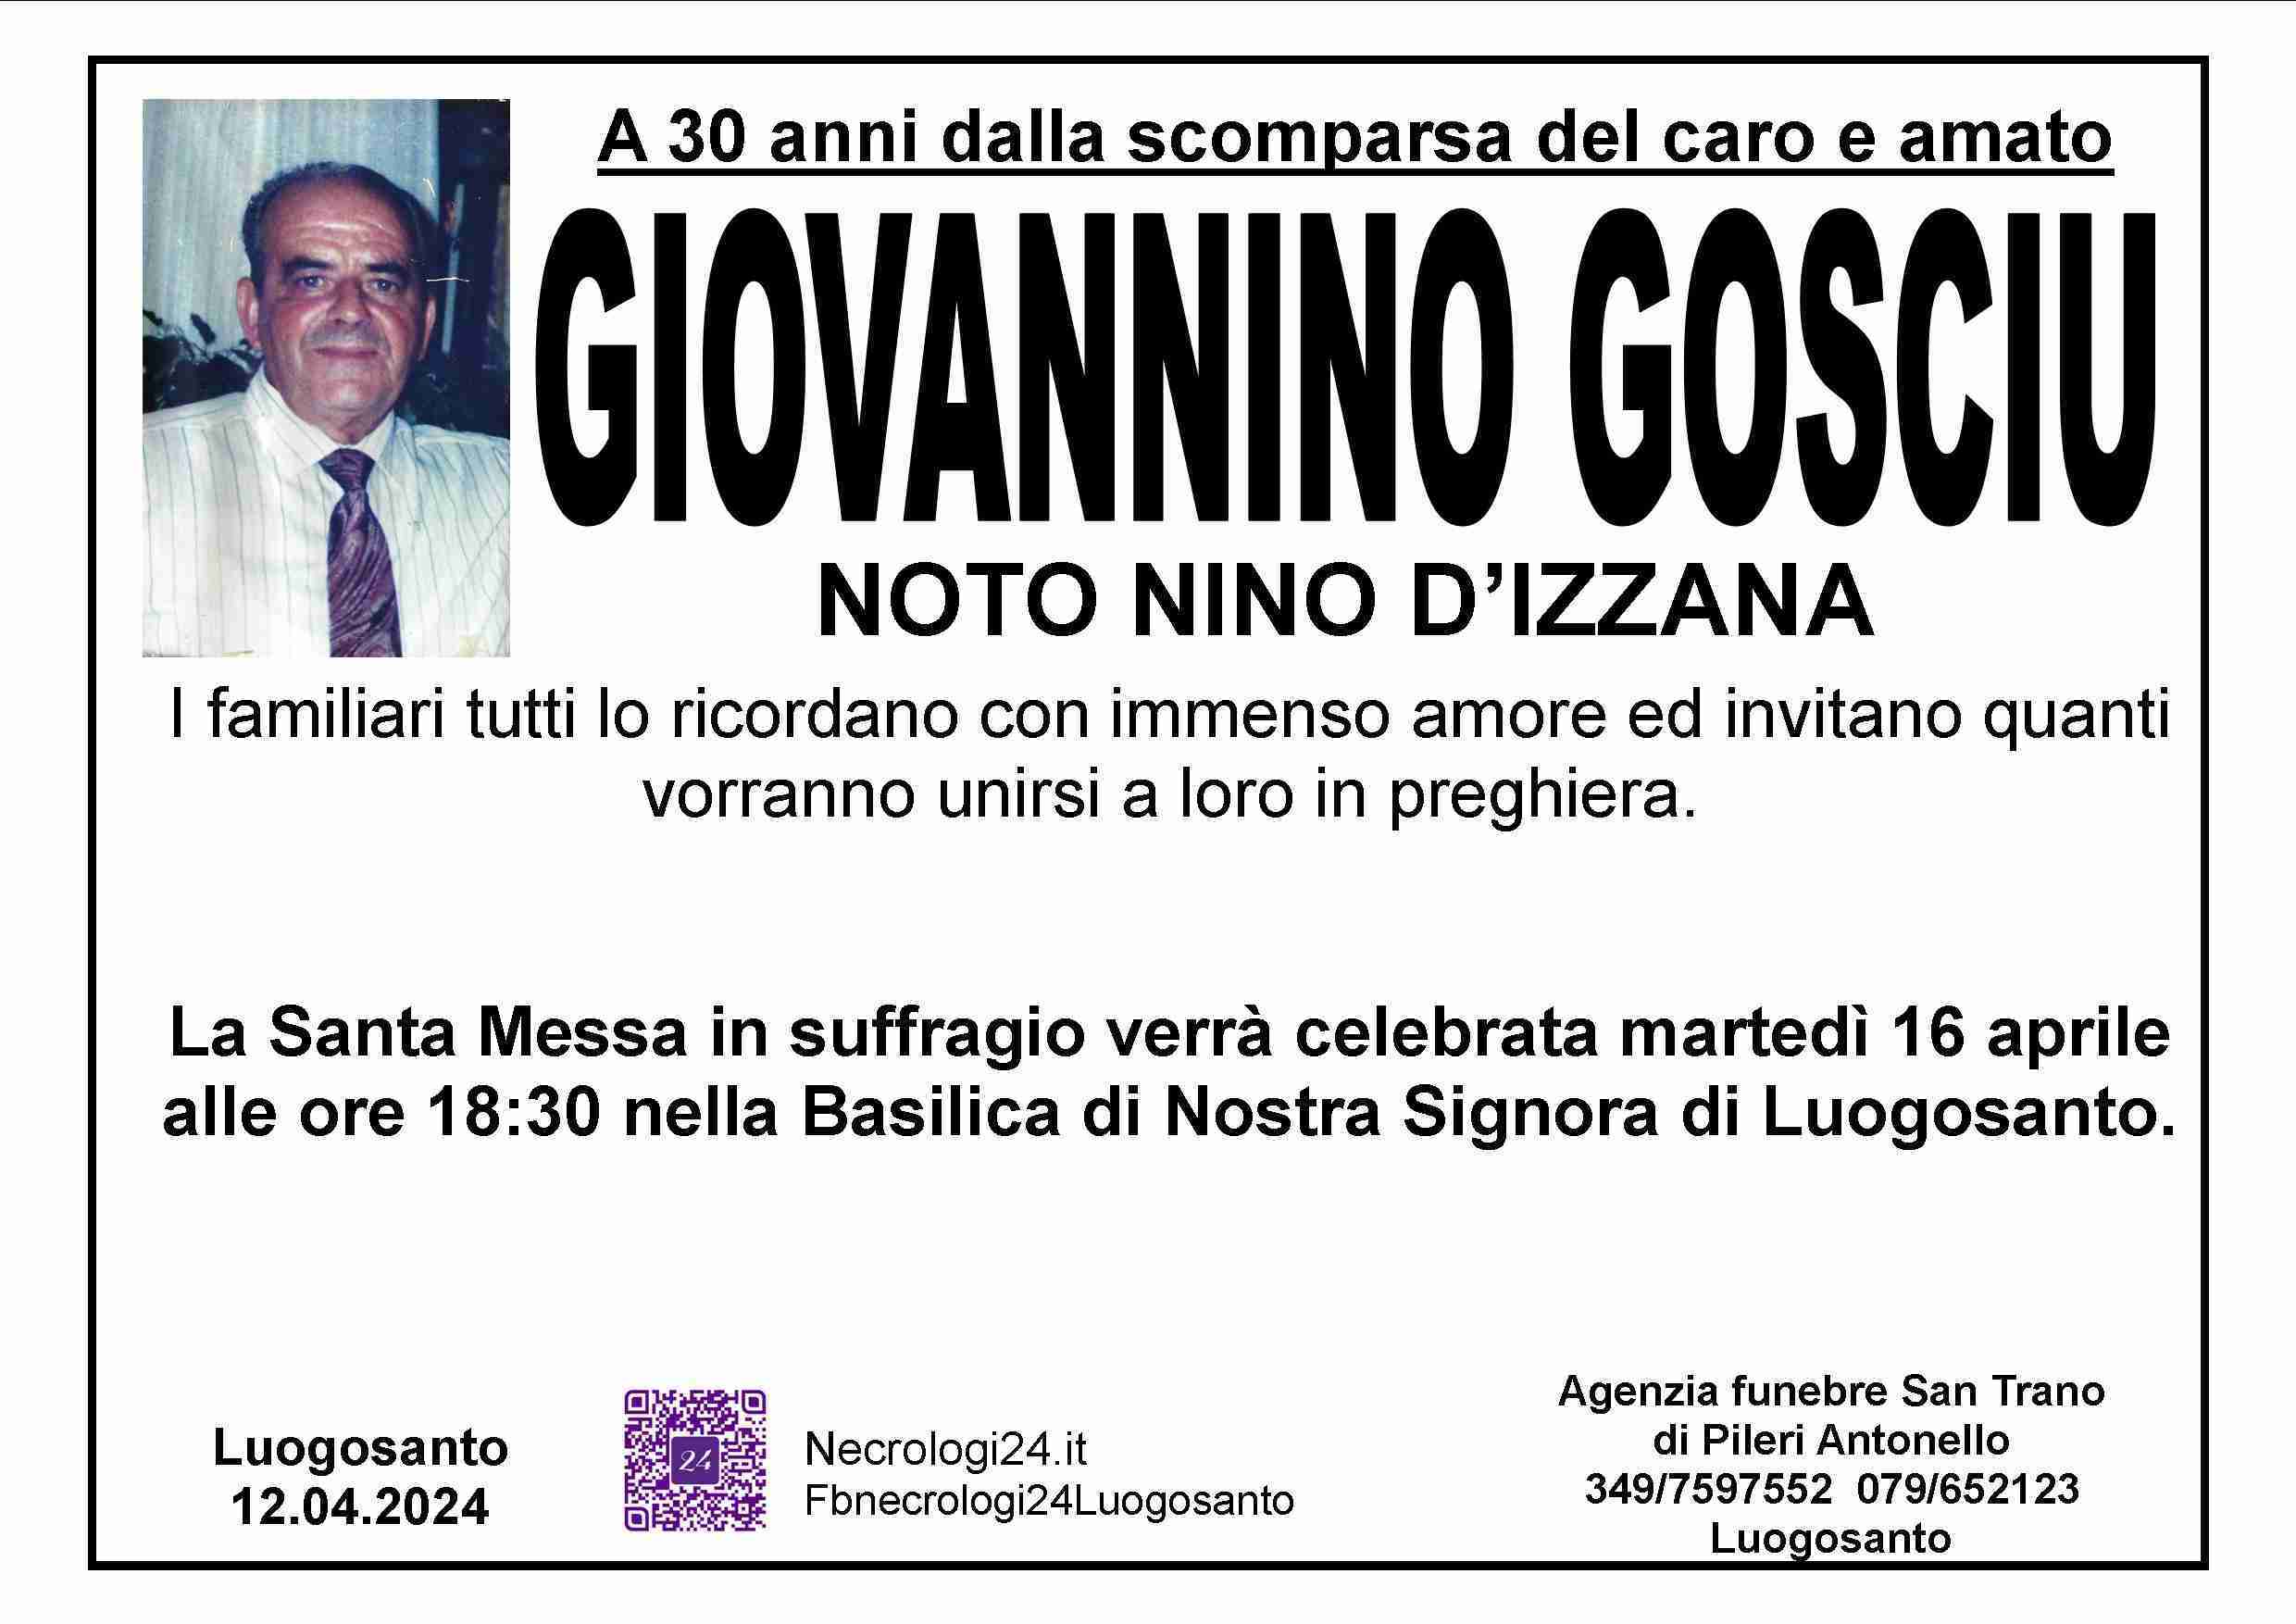 Giovannino Gosciu